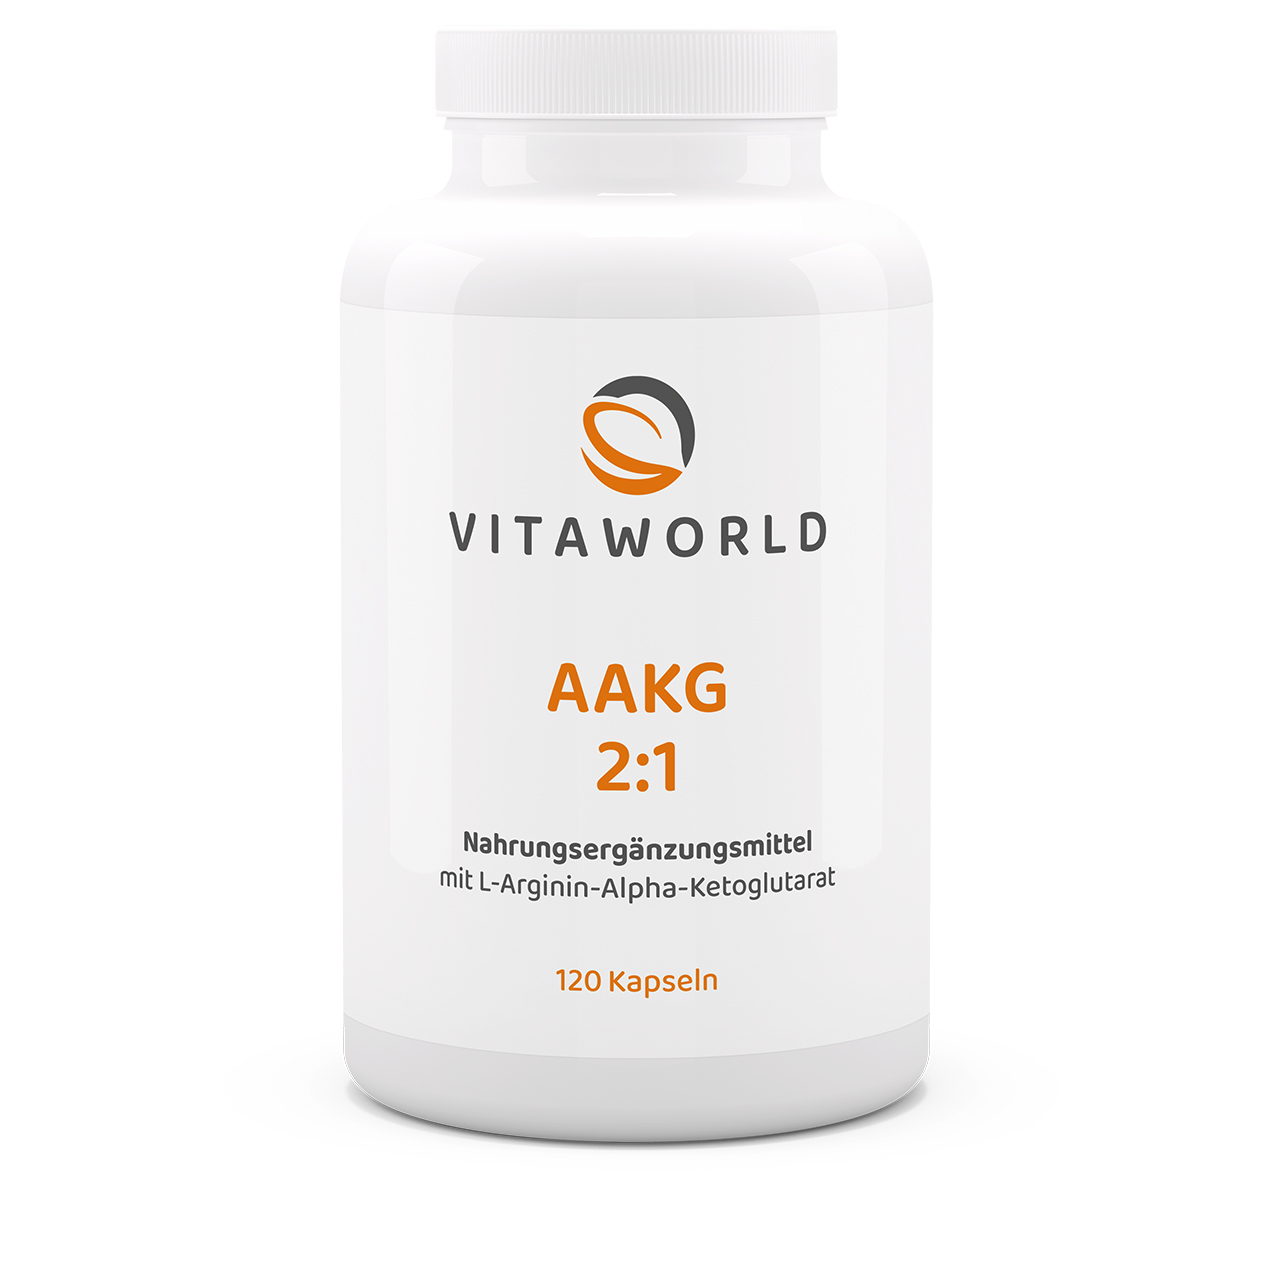 AAKG - L-Arginin-Alpha-Ketoglutarat (120 Kps)